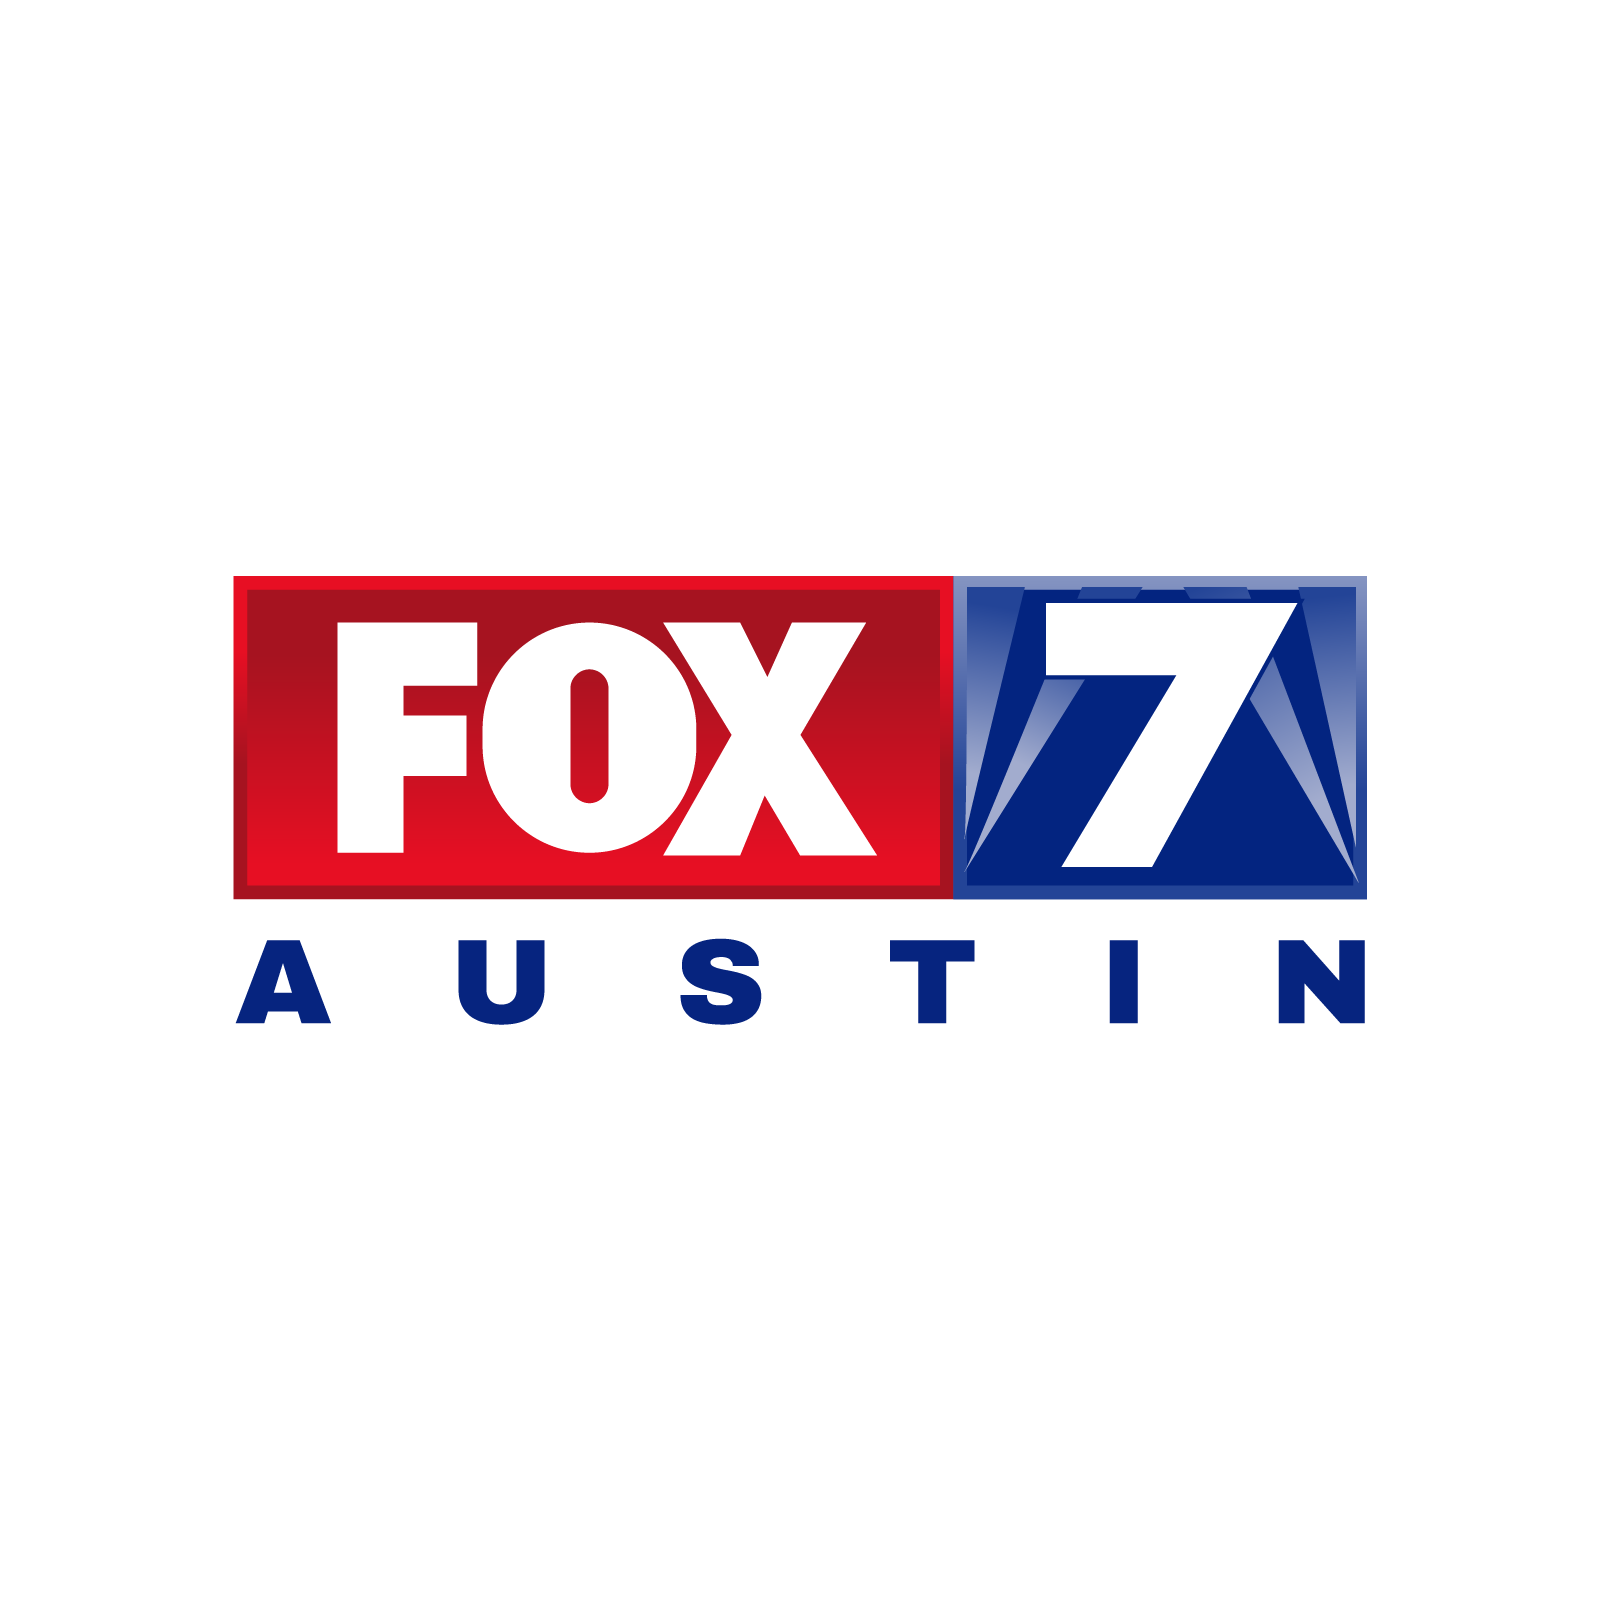 Press Logos_Fox News 7 Austin.png